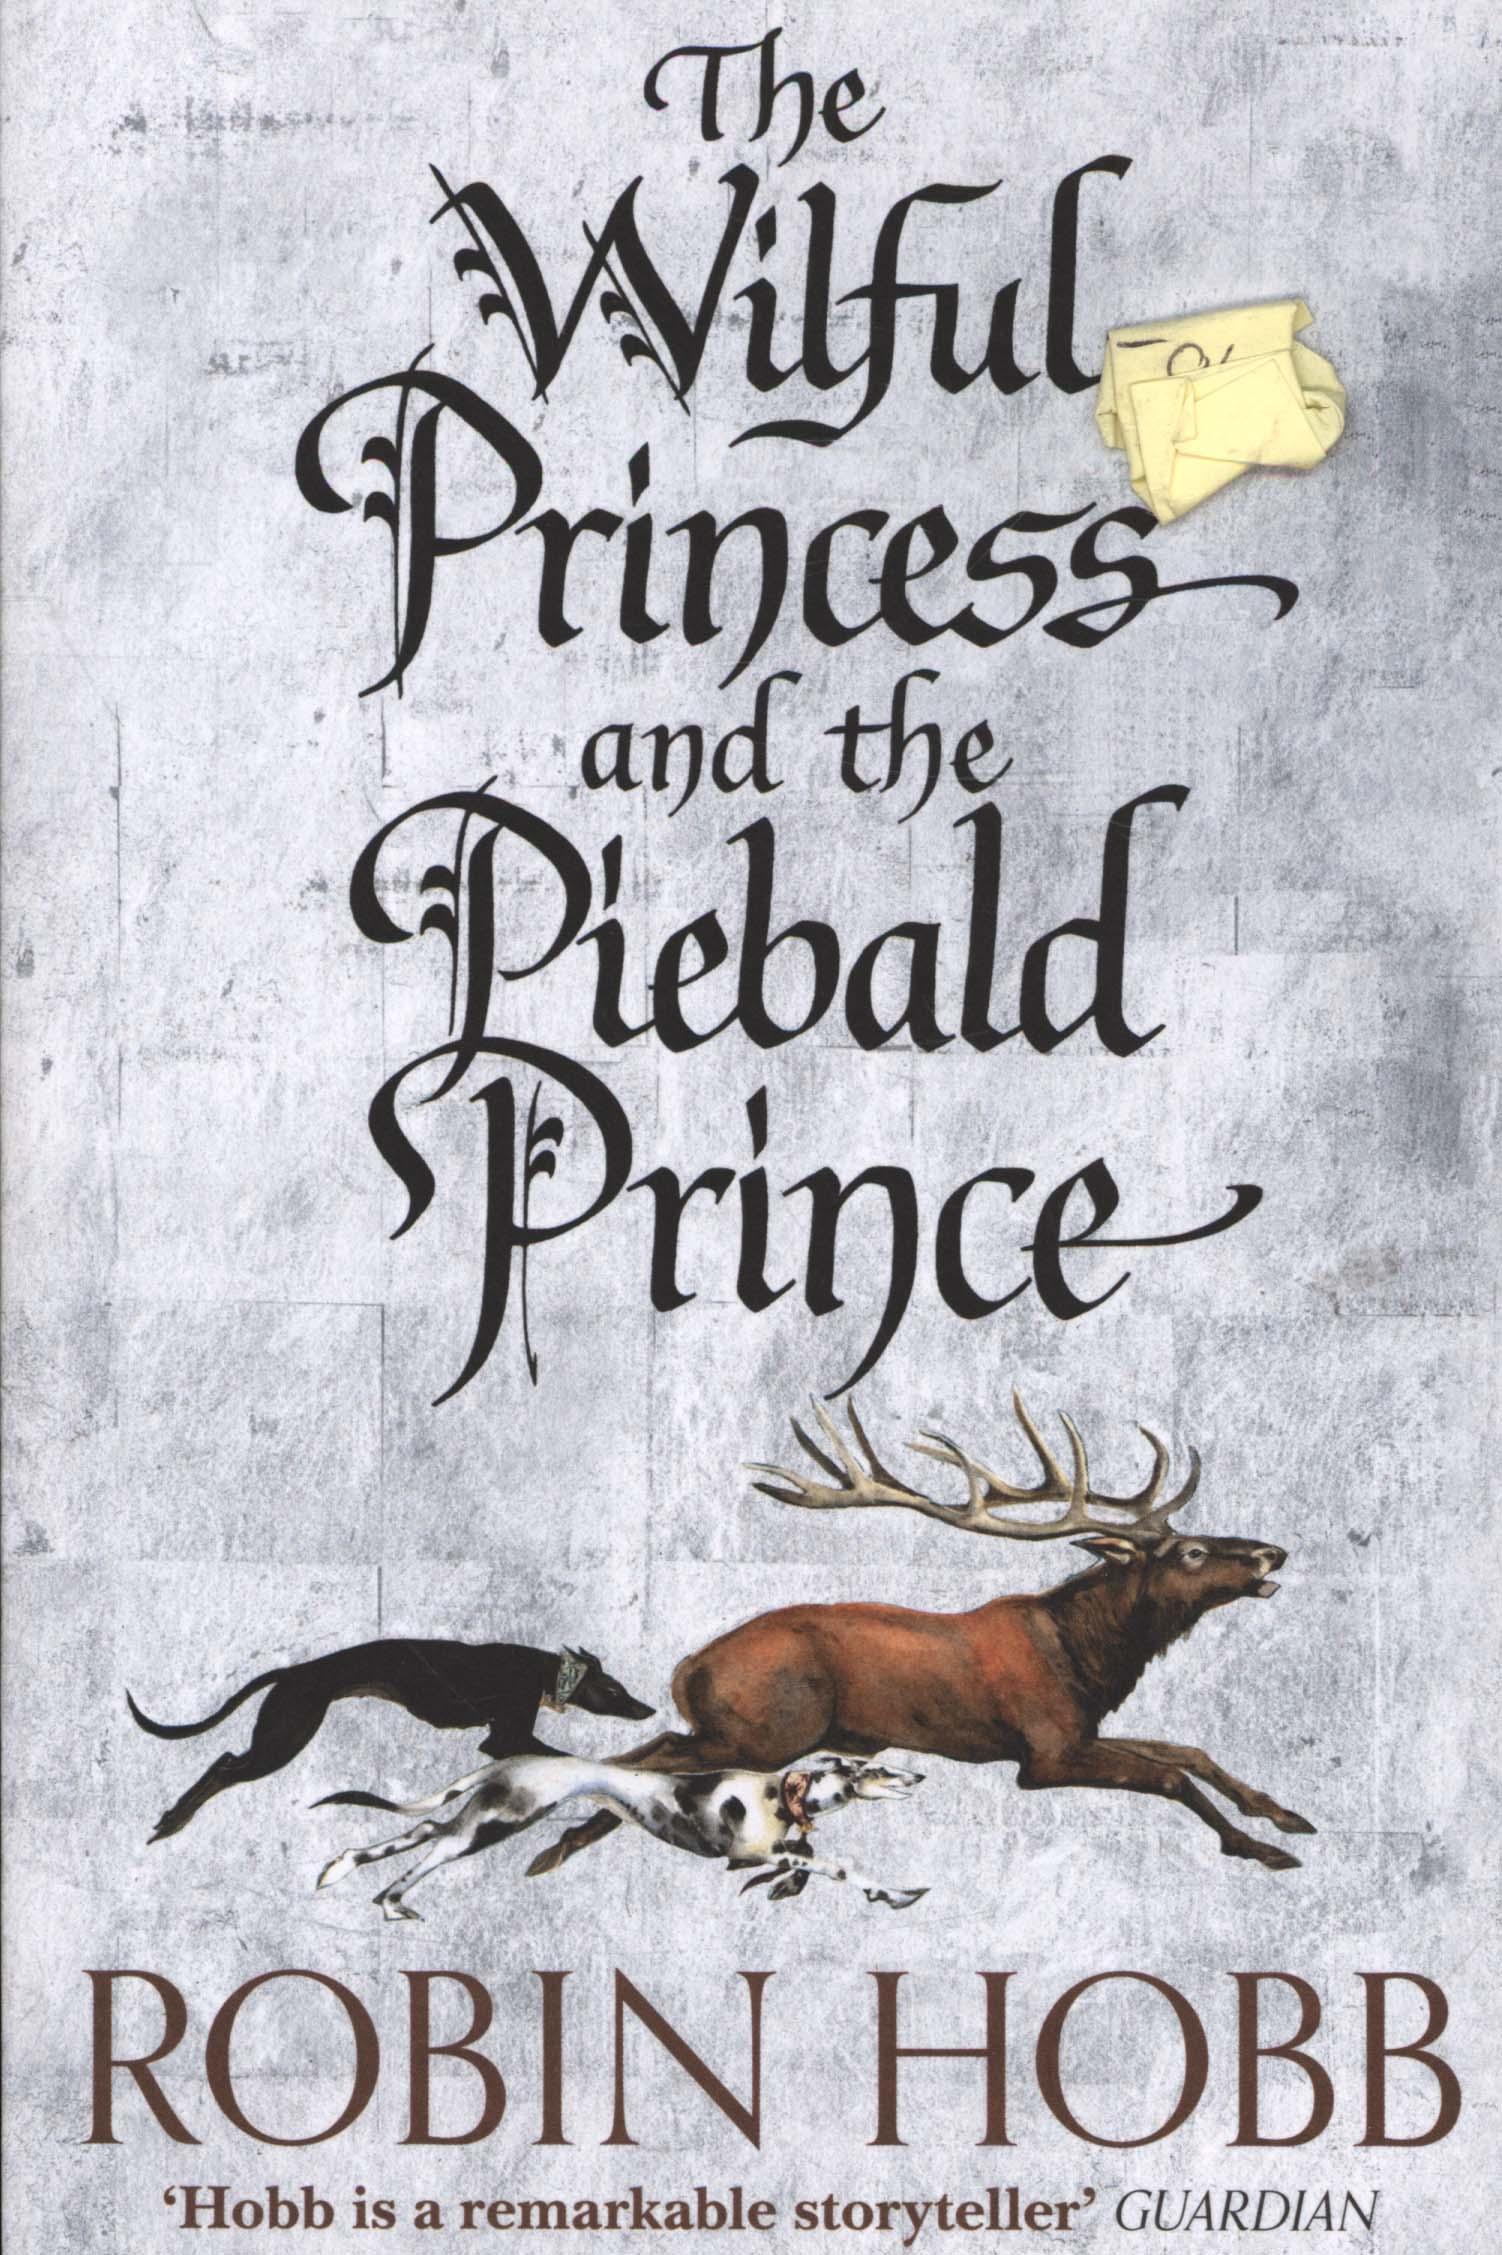 Wilful Princess and the Piebald Prince